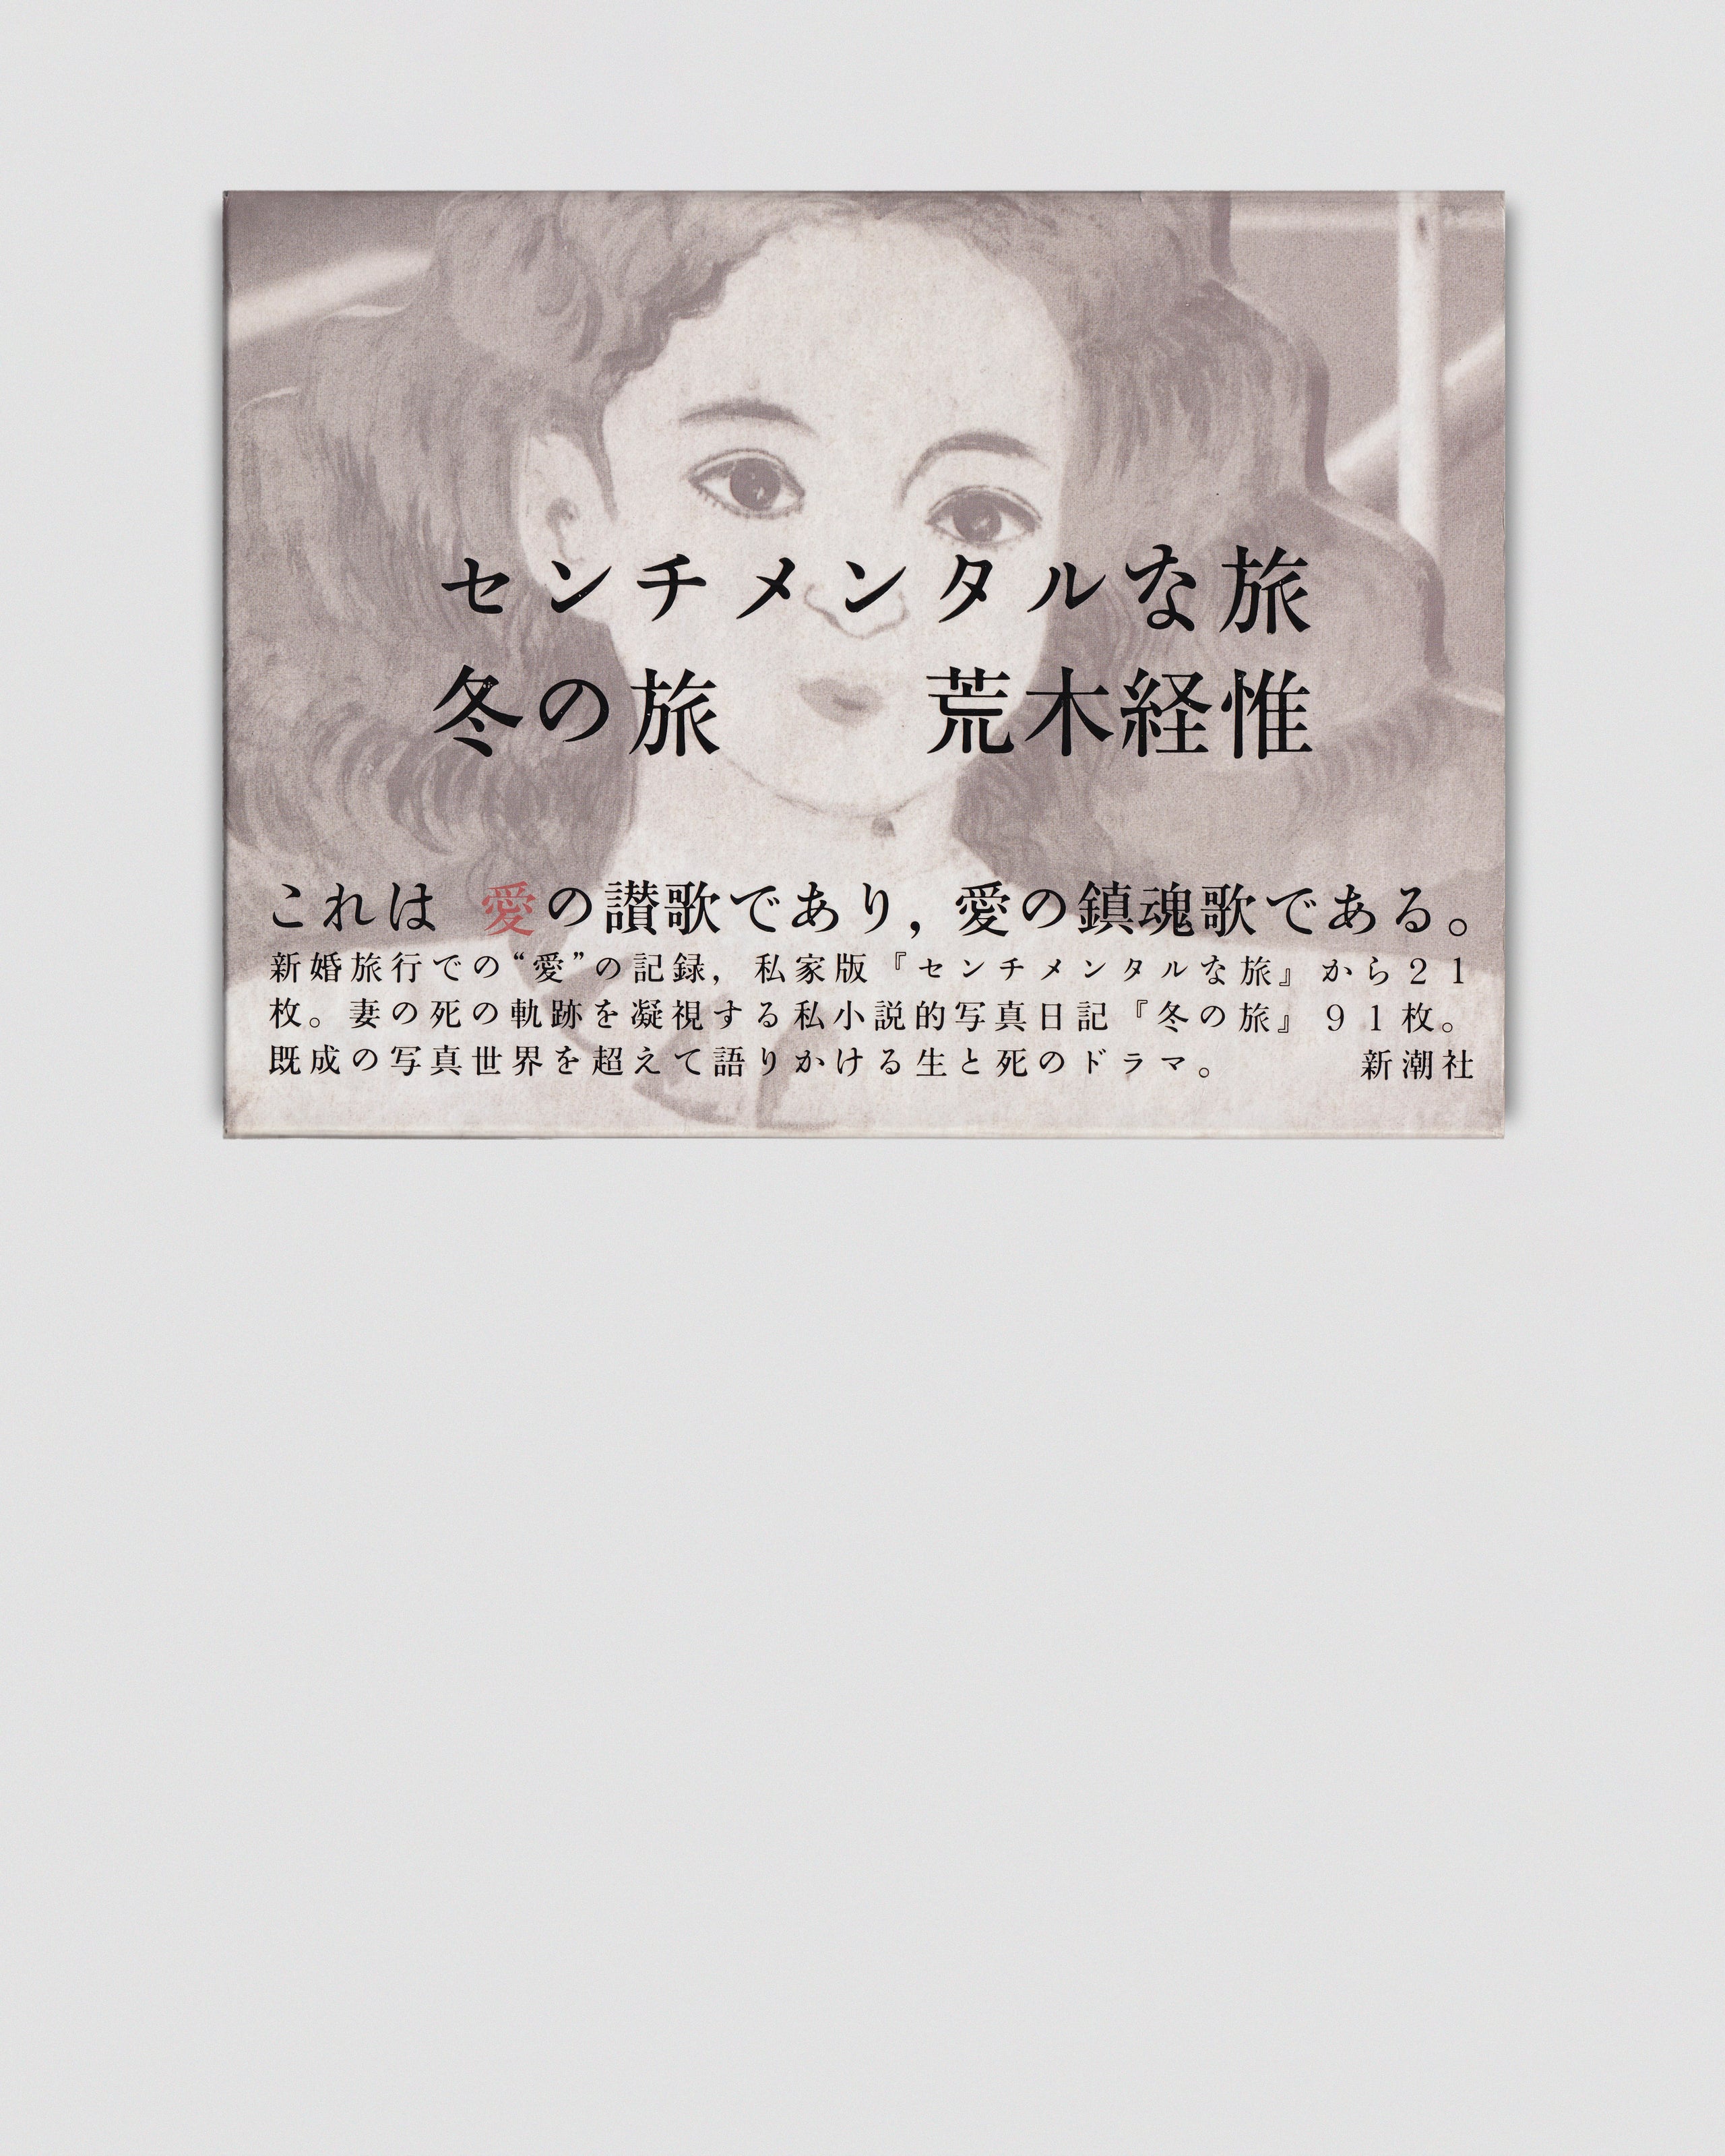 Sentimental Journey/Winter Journey - Nobuyoshi Araki ($85) - In 